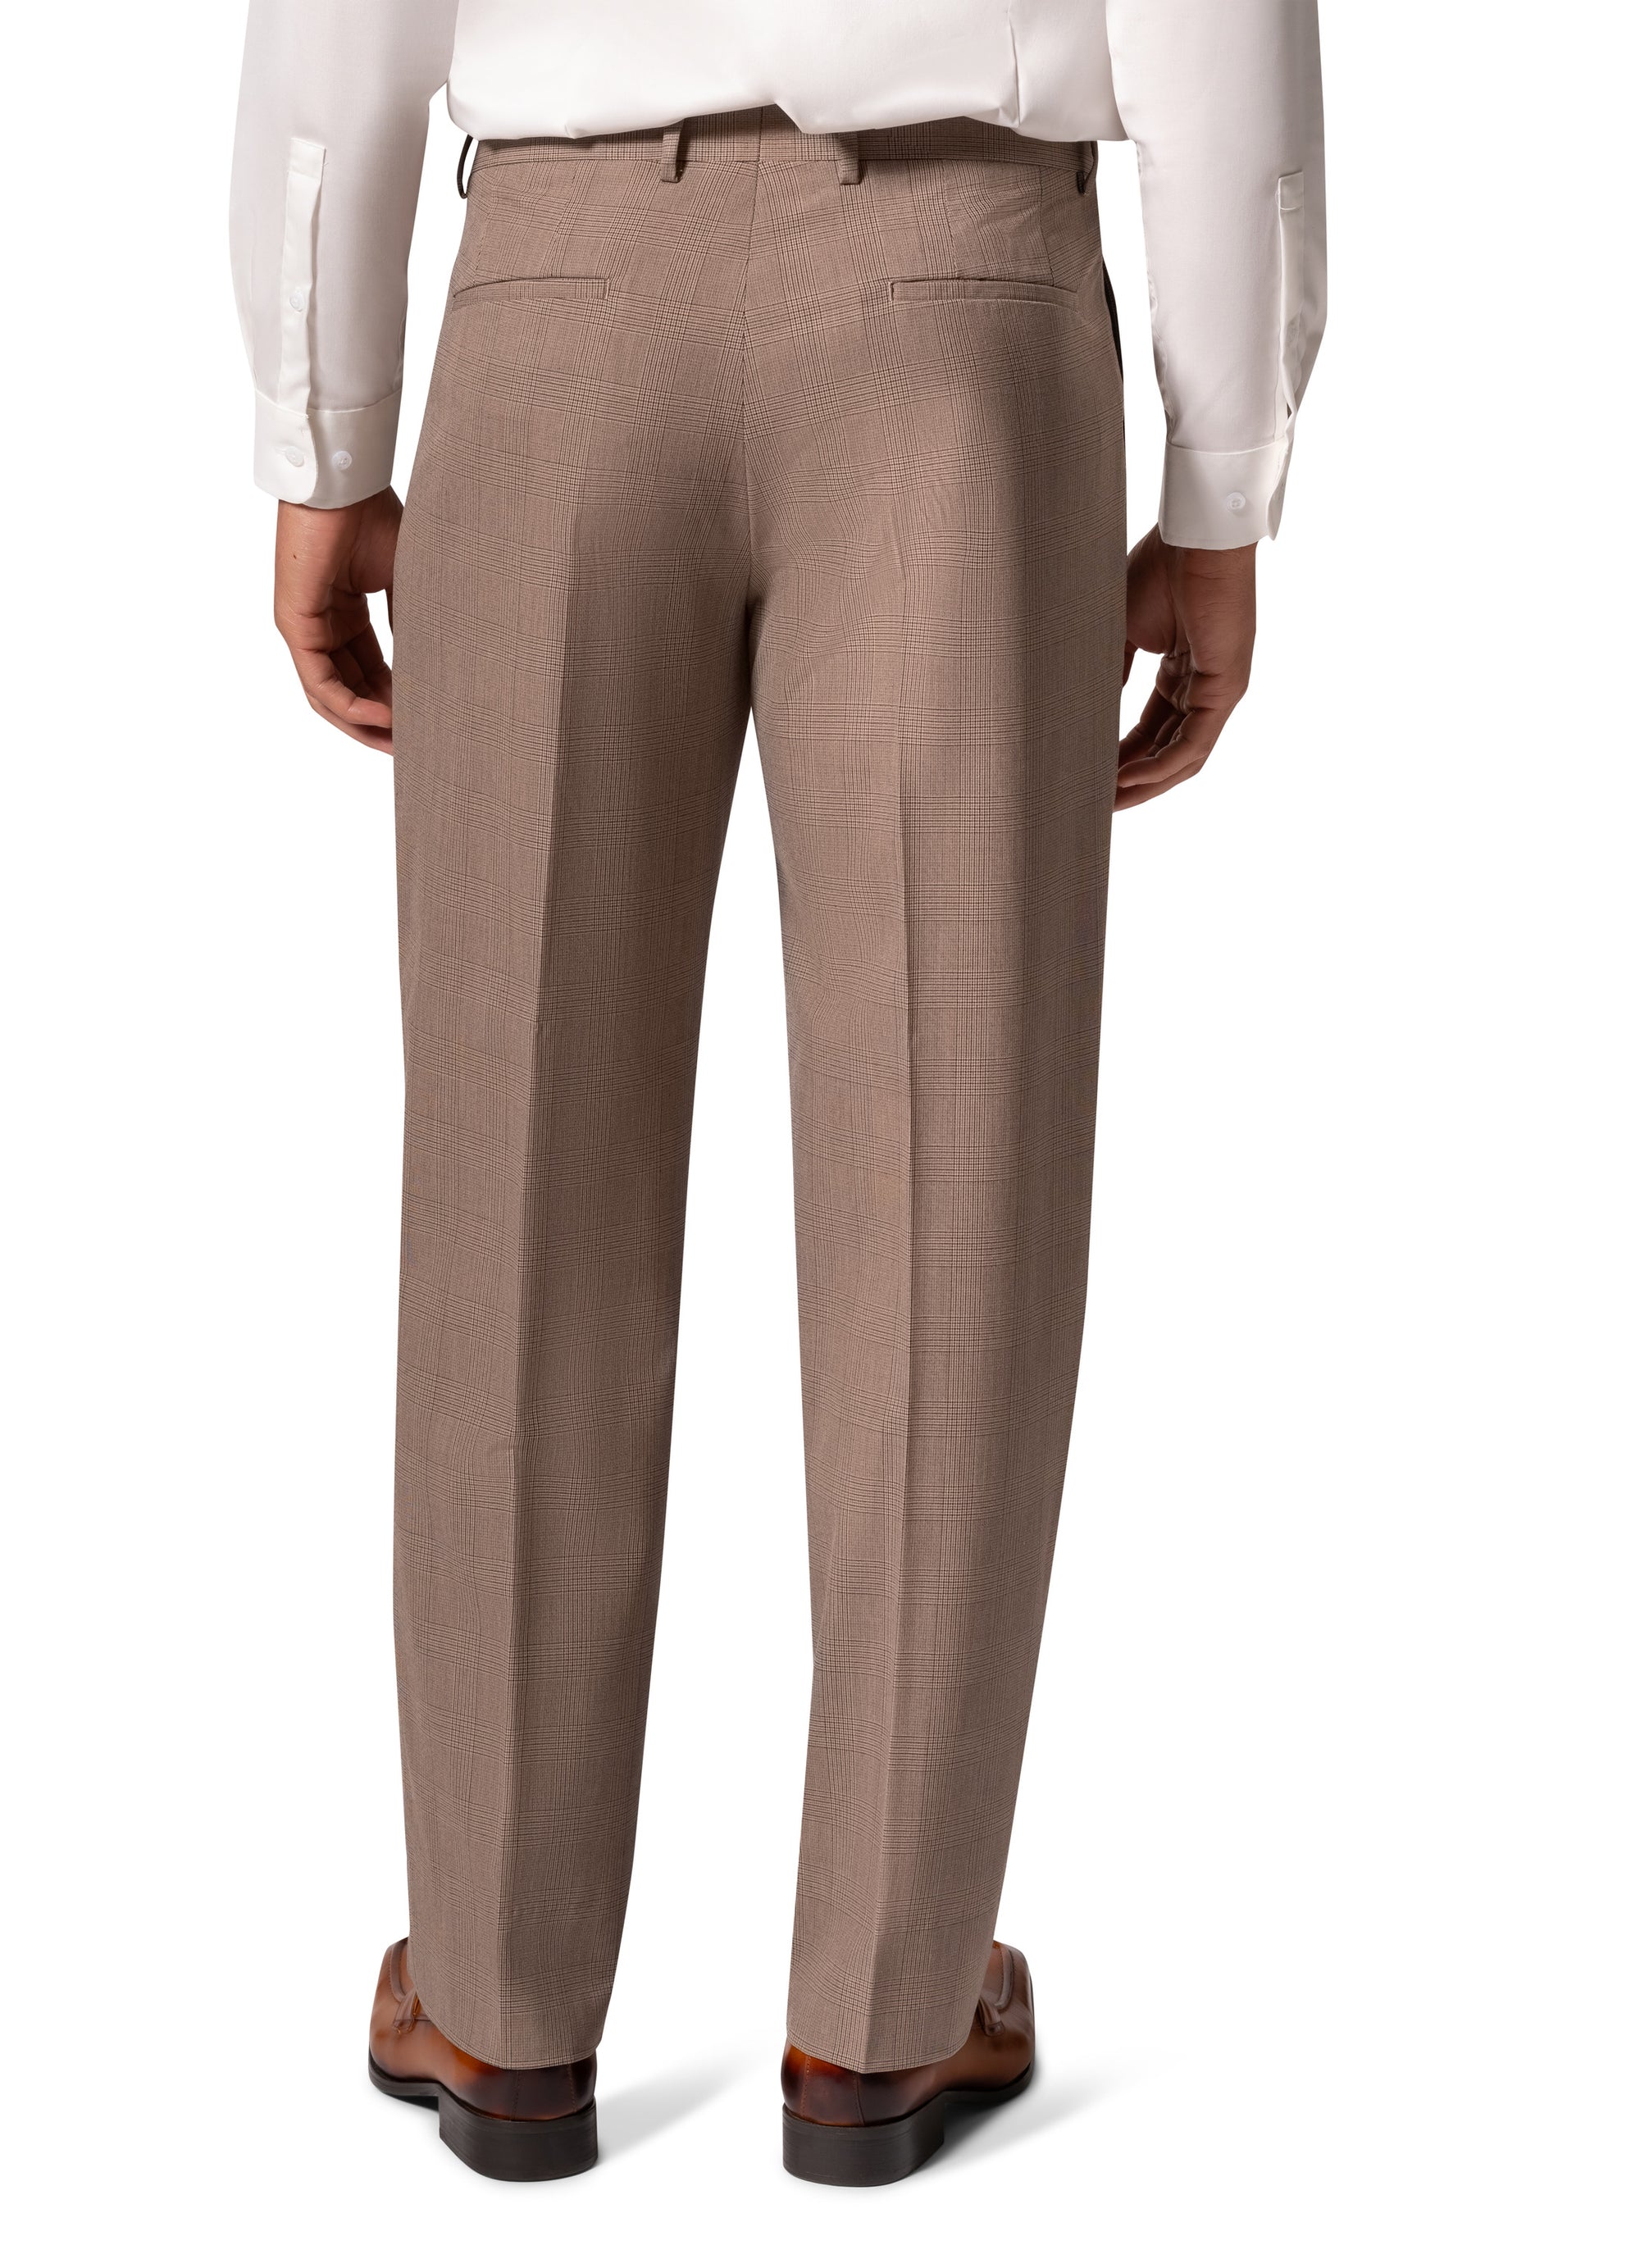 Berragamo BP04KE-07 3PC Notch Slim Suit - Tan